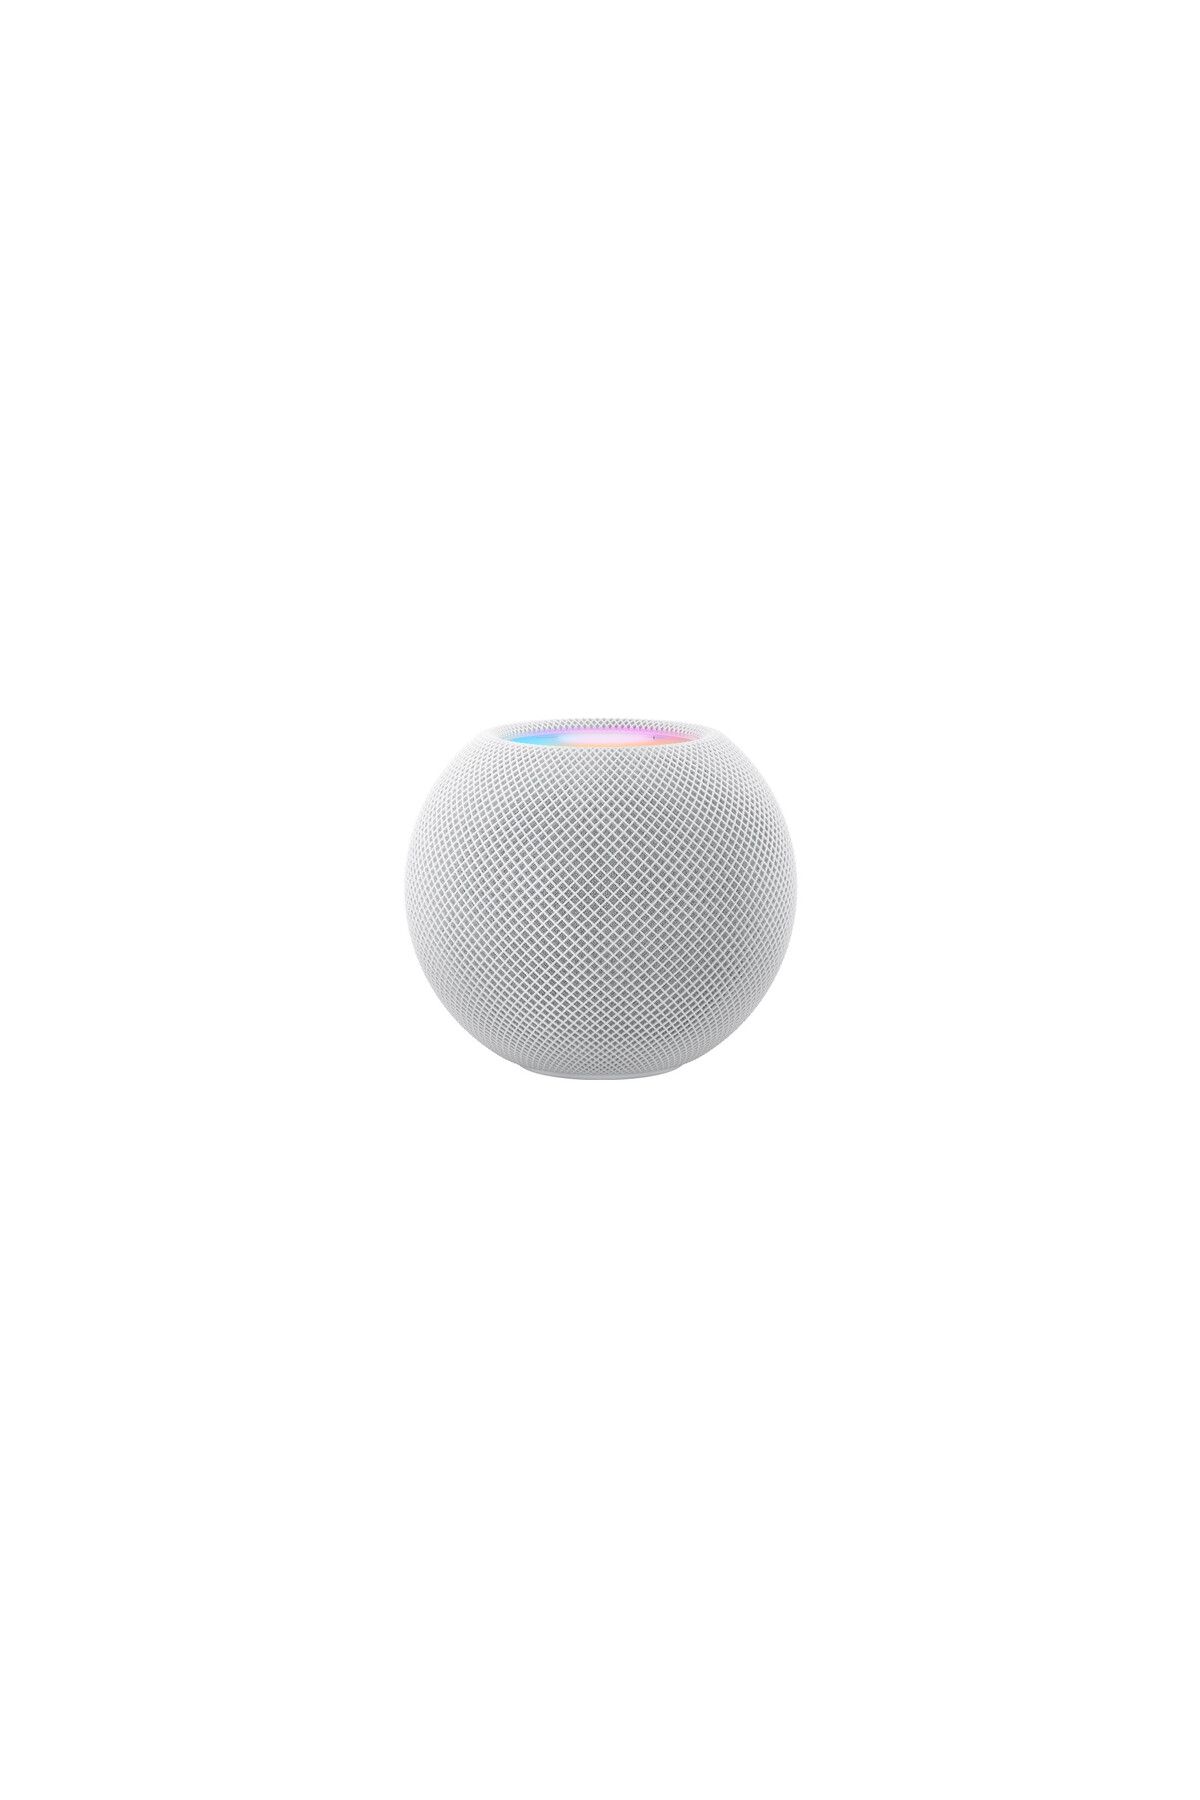 Apple HomePod mini -Beyaz